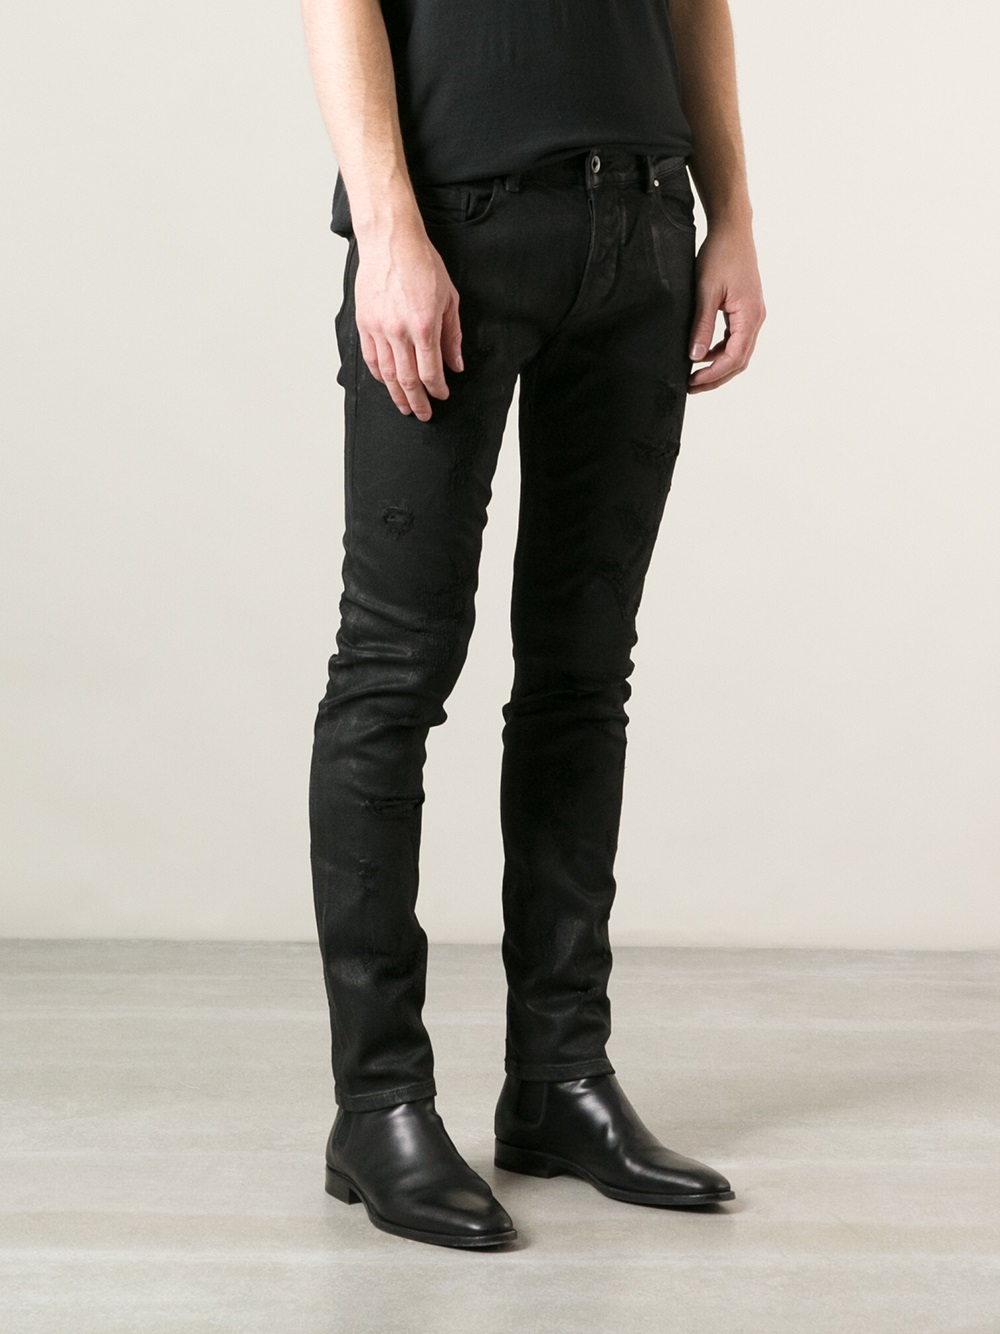 Lyst - Diesel Black Gold Skinny Jeans in Black for Men